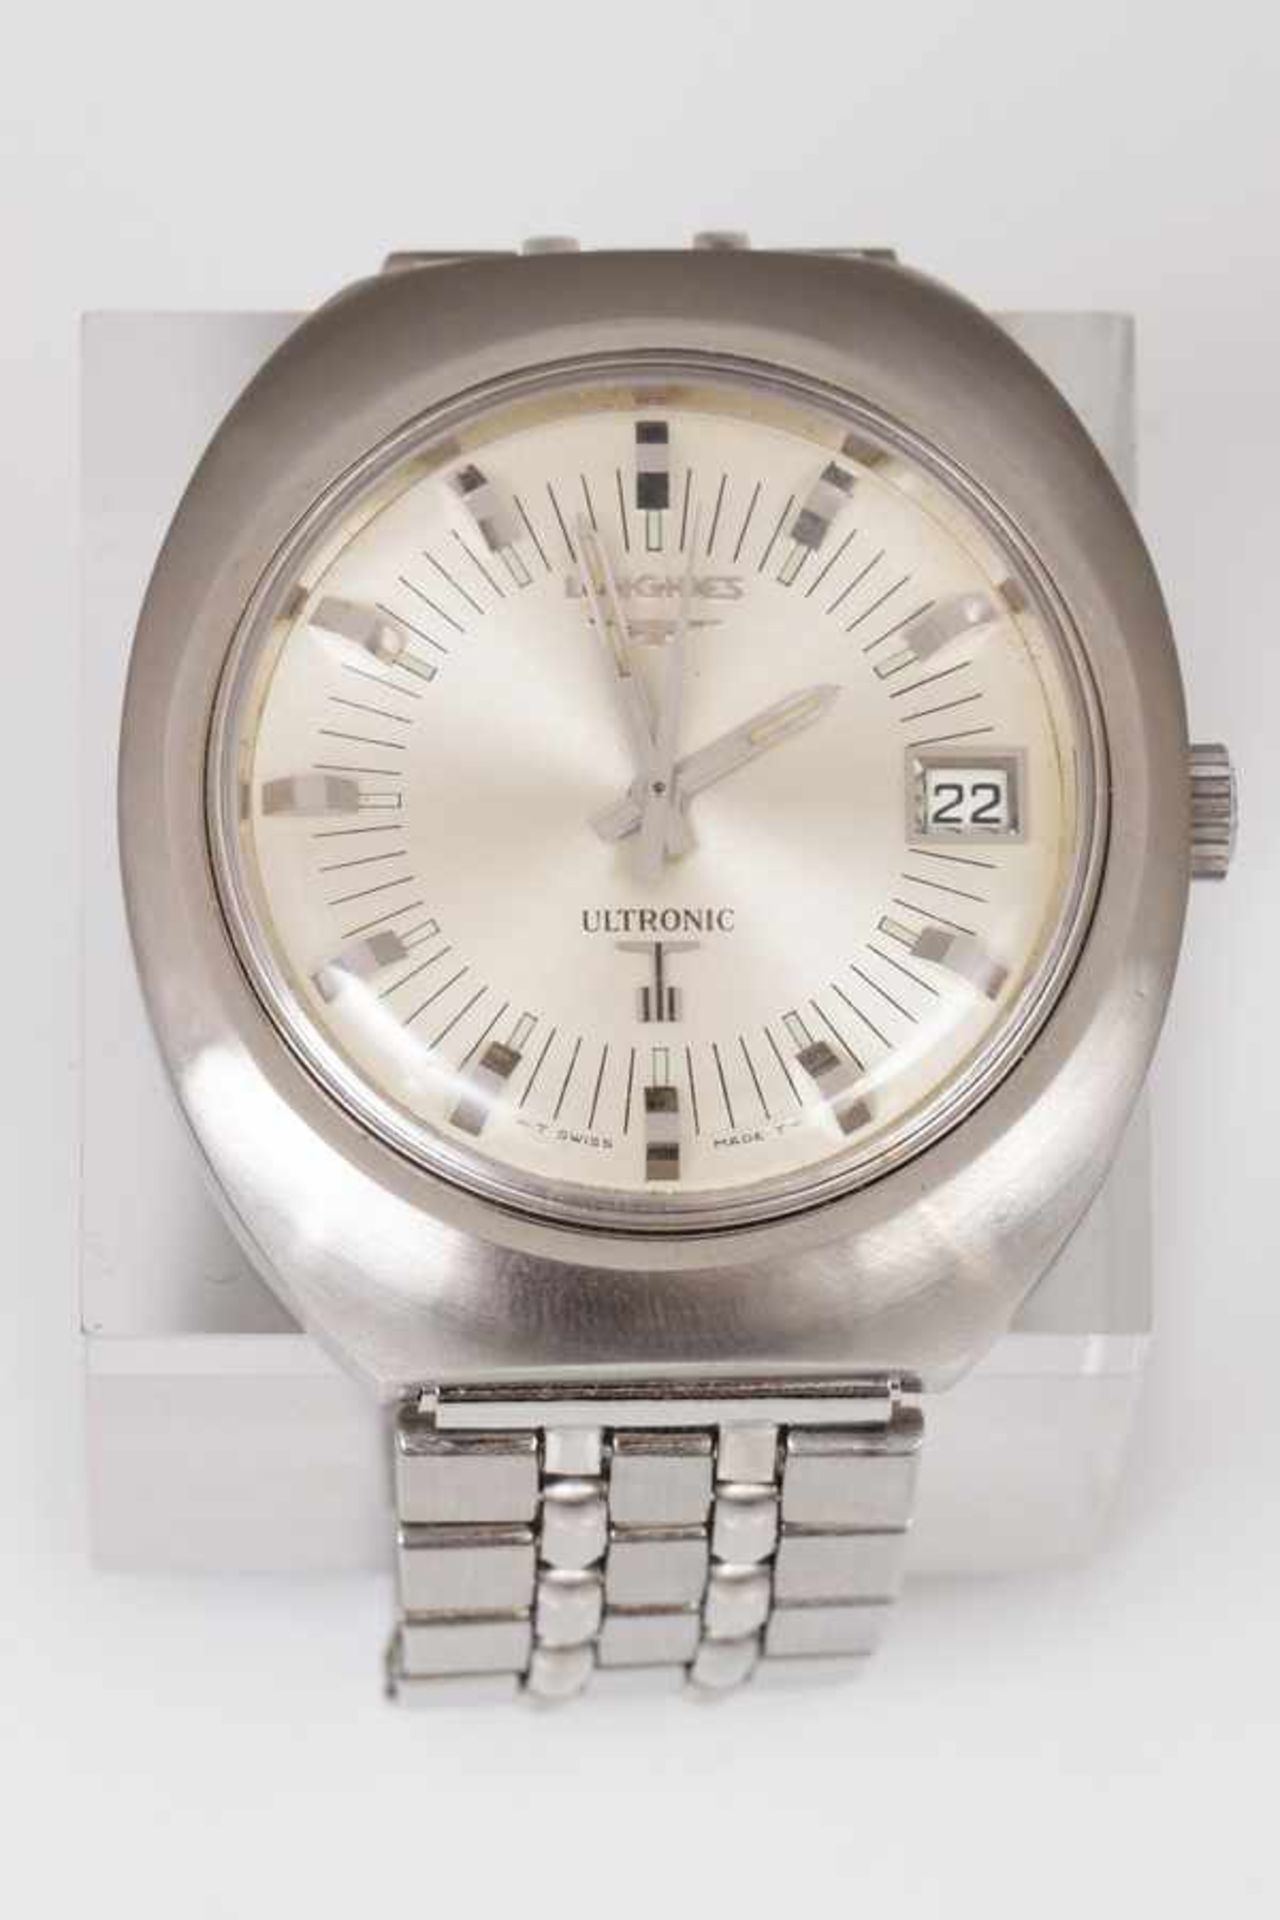 LONGINES Herrenarmbanduhr Modell Ultronic, Stahlgehäuse, Stimmgabel-Uhrwerk (12 jewels),